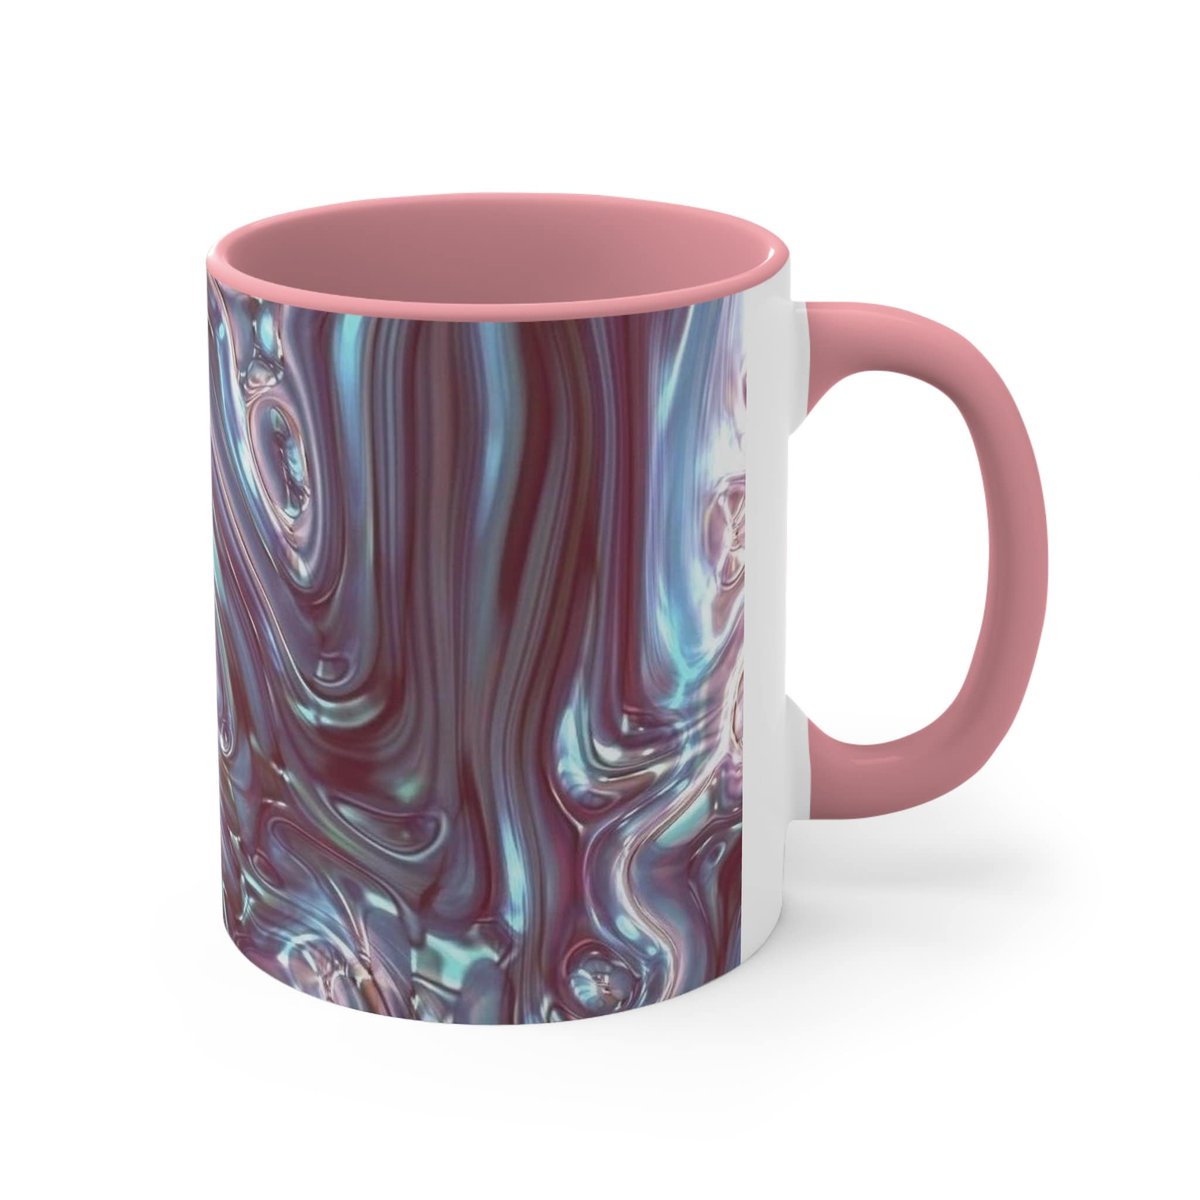 gizilist.etsy.com/listing/160832…
#etsy #EtsySeller #glass #cup #Pink #pinkcup #design #art